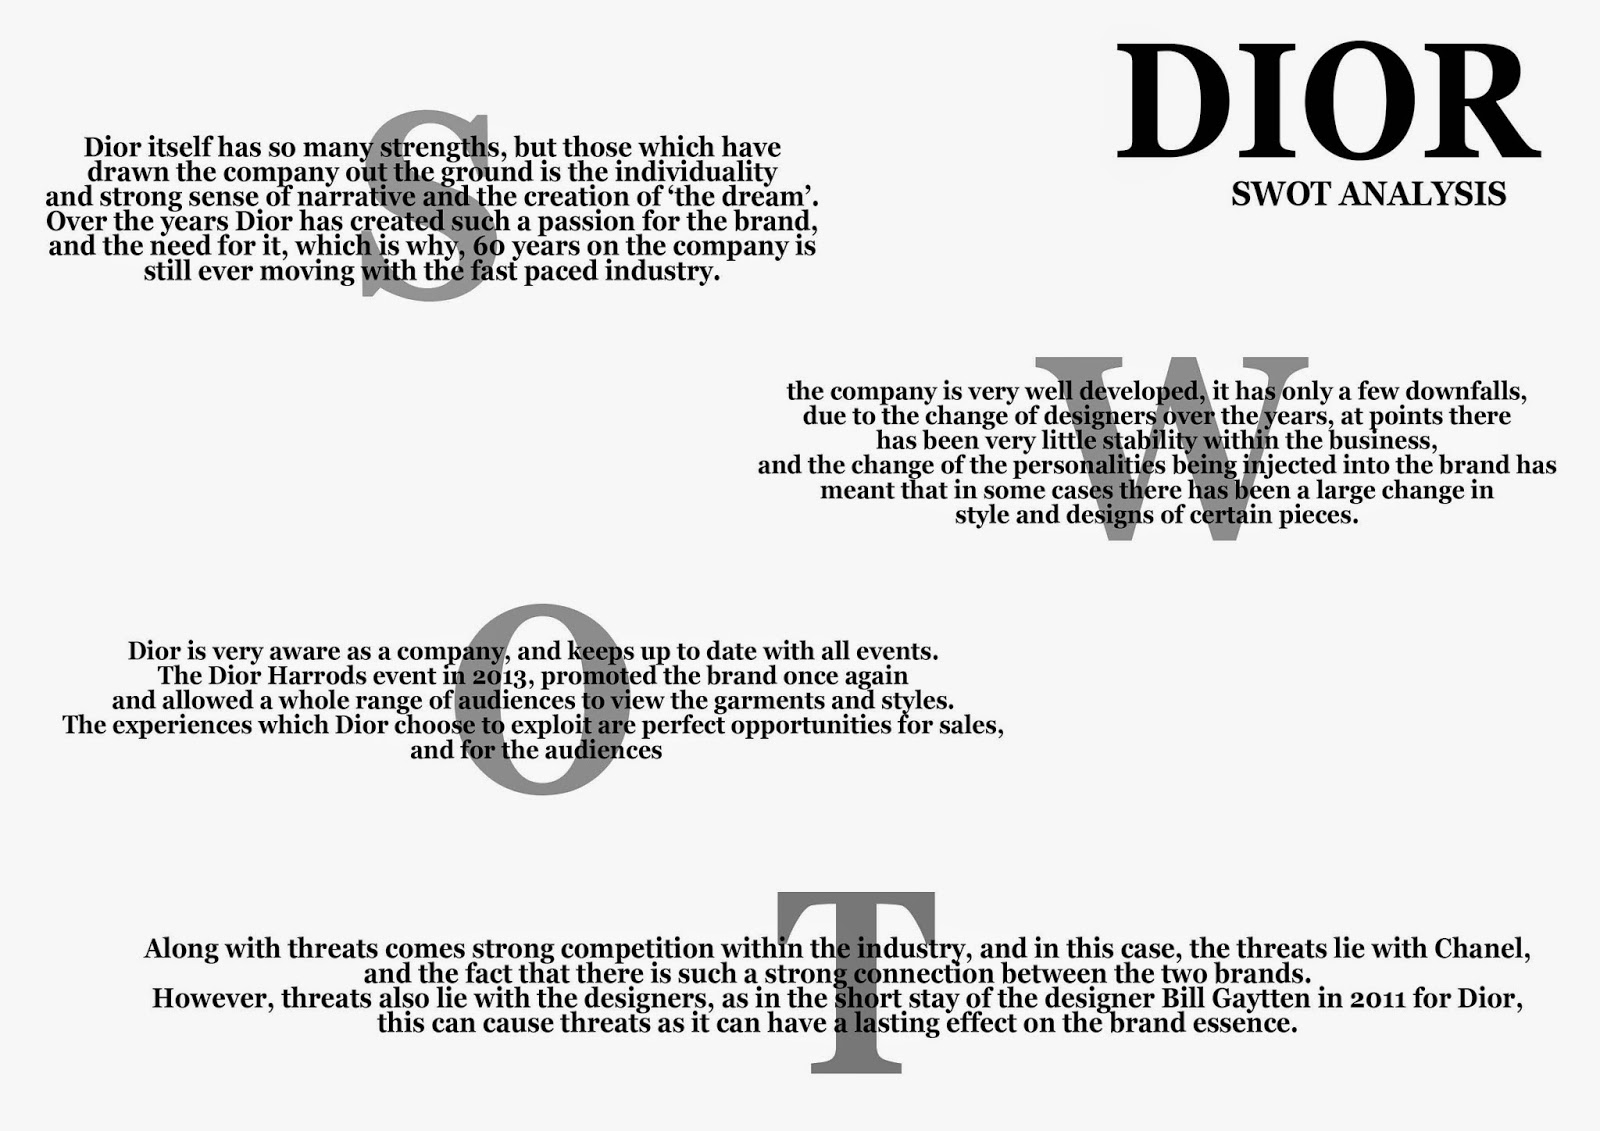 Christian Dior SWOT Analysis